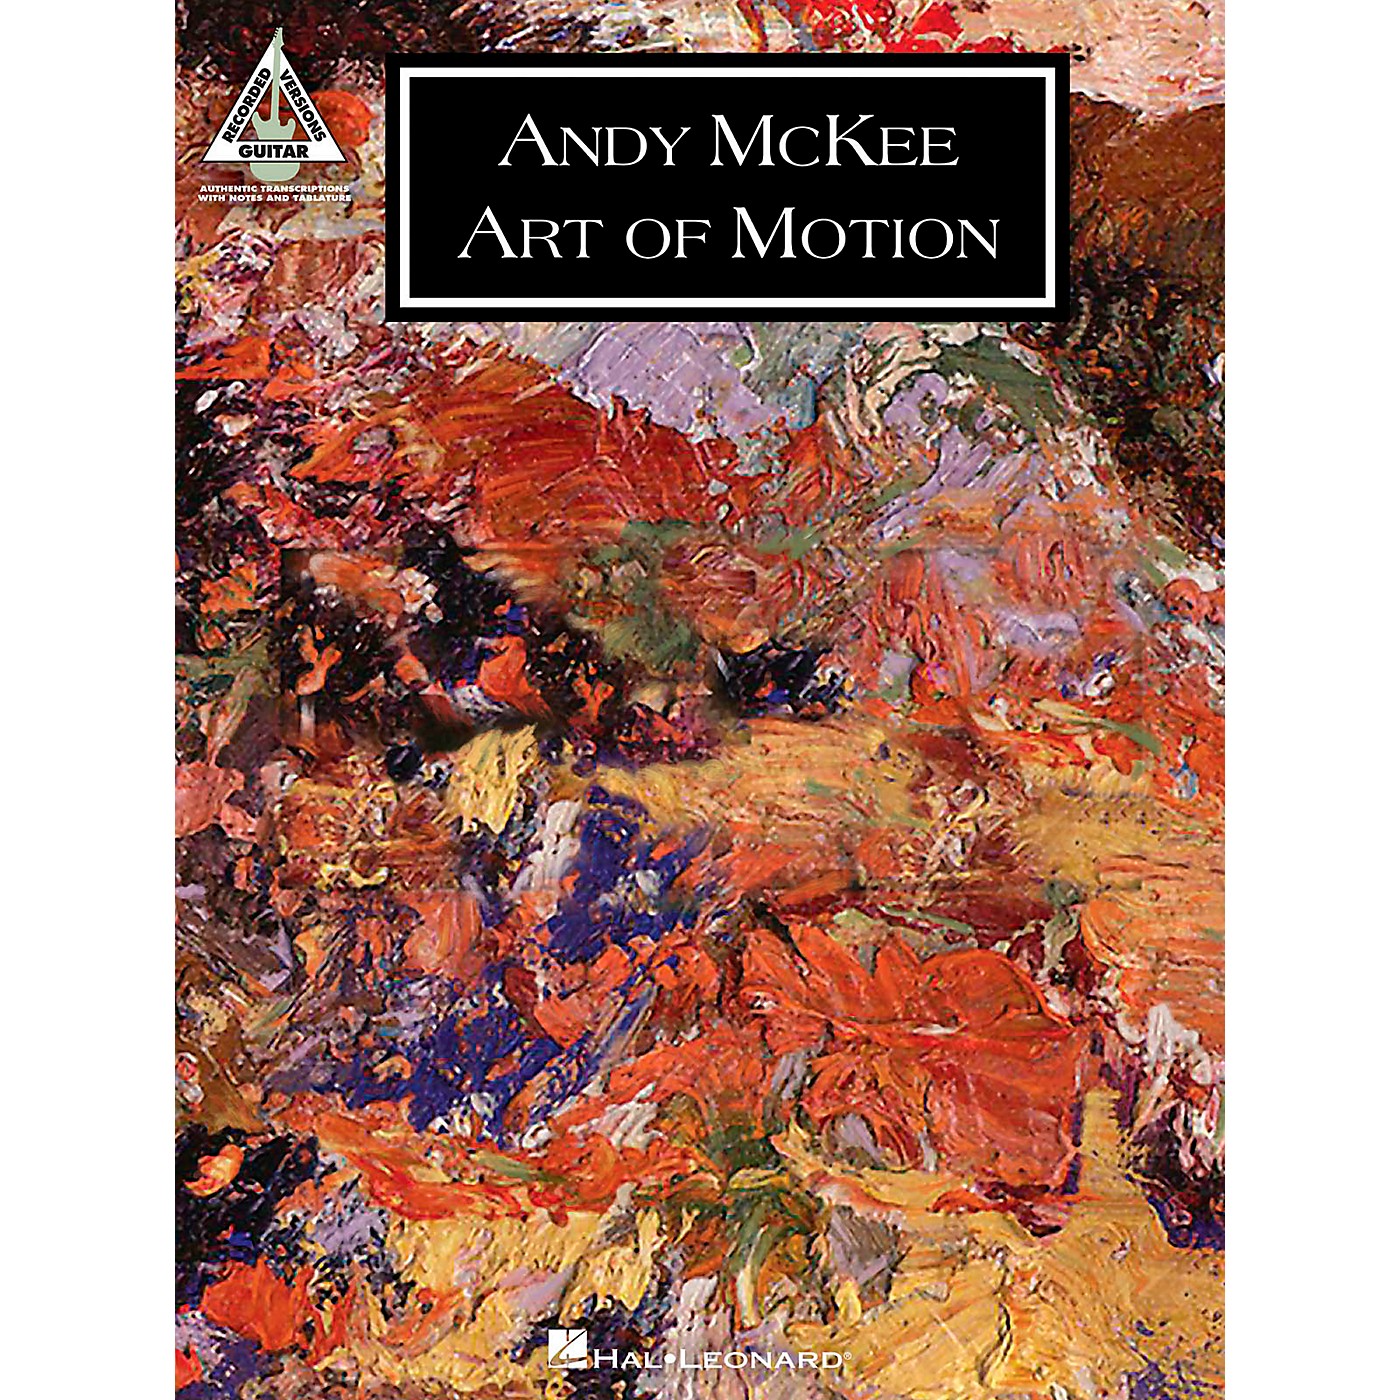 Hal Leonard Andy Mckee - Art Of Motion Guitar Tab Songbook thumbnail